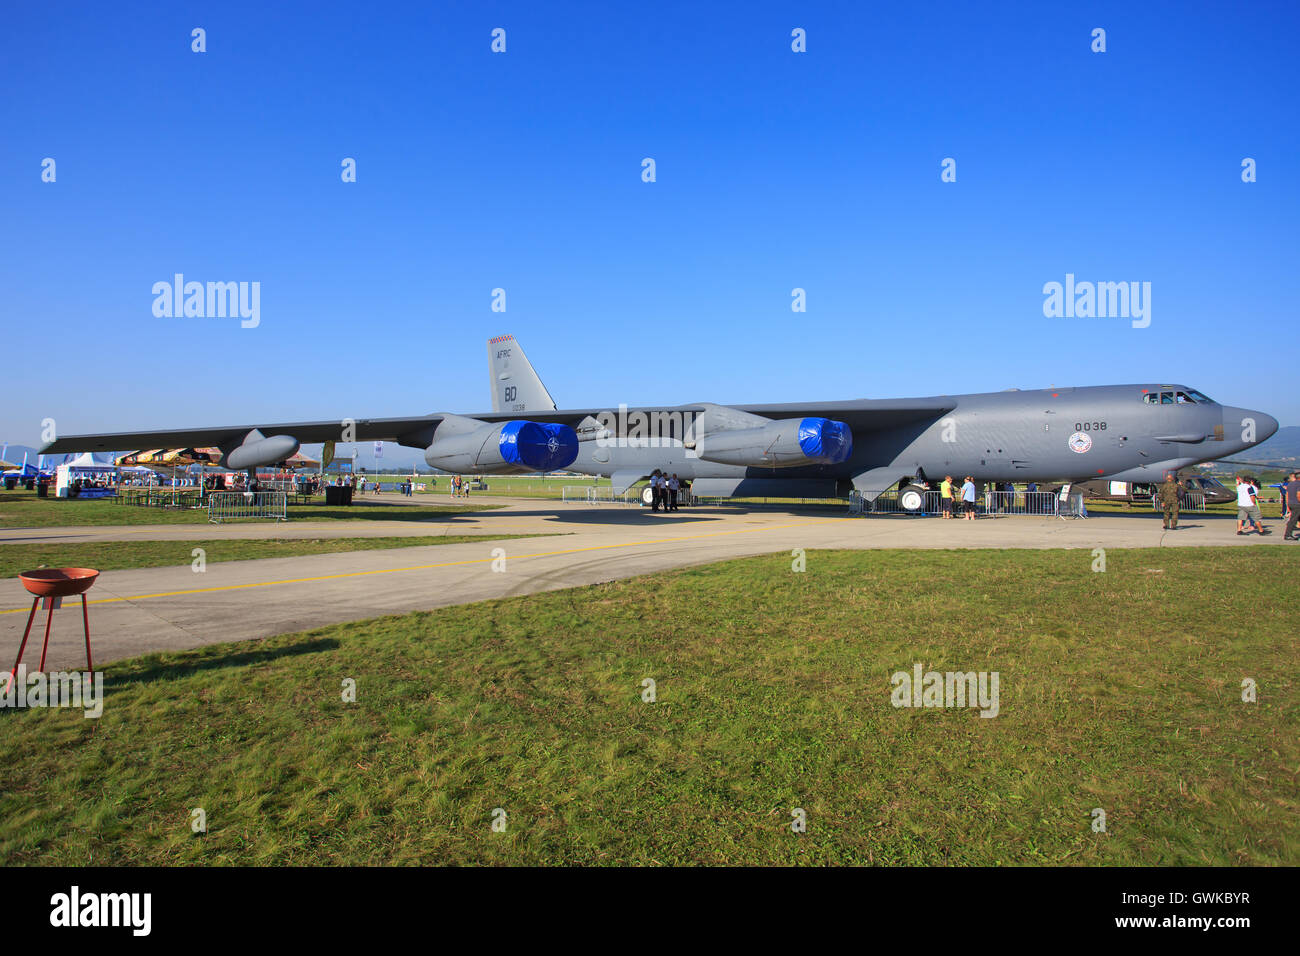 SLIAC, SLOVAKIA - AUGUST 30: Boeing B-52H Stratofortress during SIAF airshow in Sliac, Slovakia Stock Photo